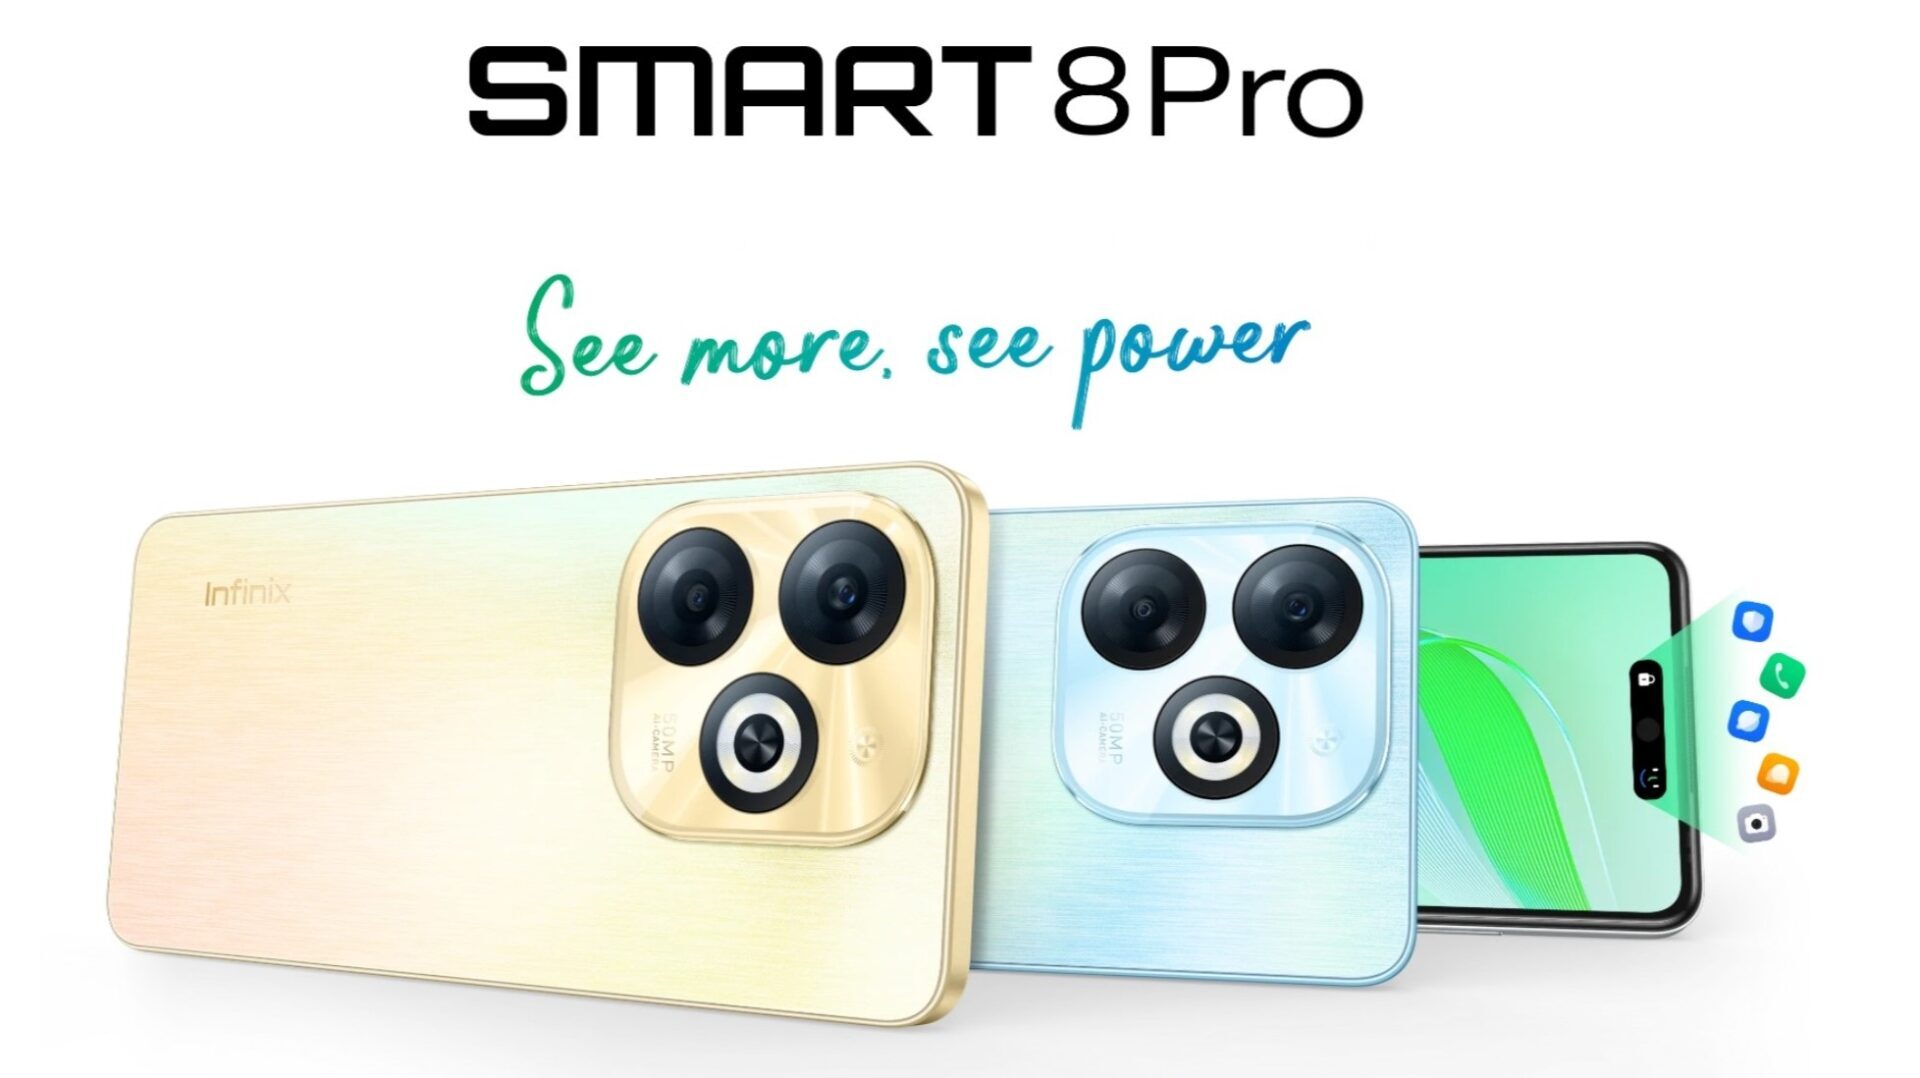 Infinix Smart 8 Pro introduced